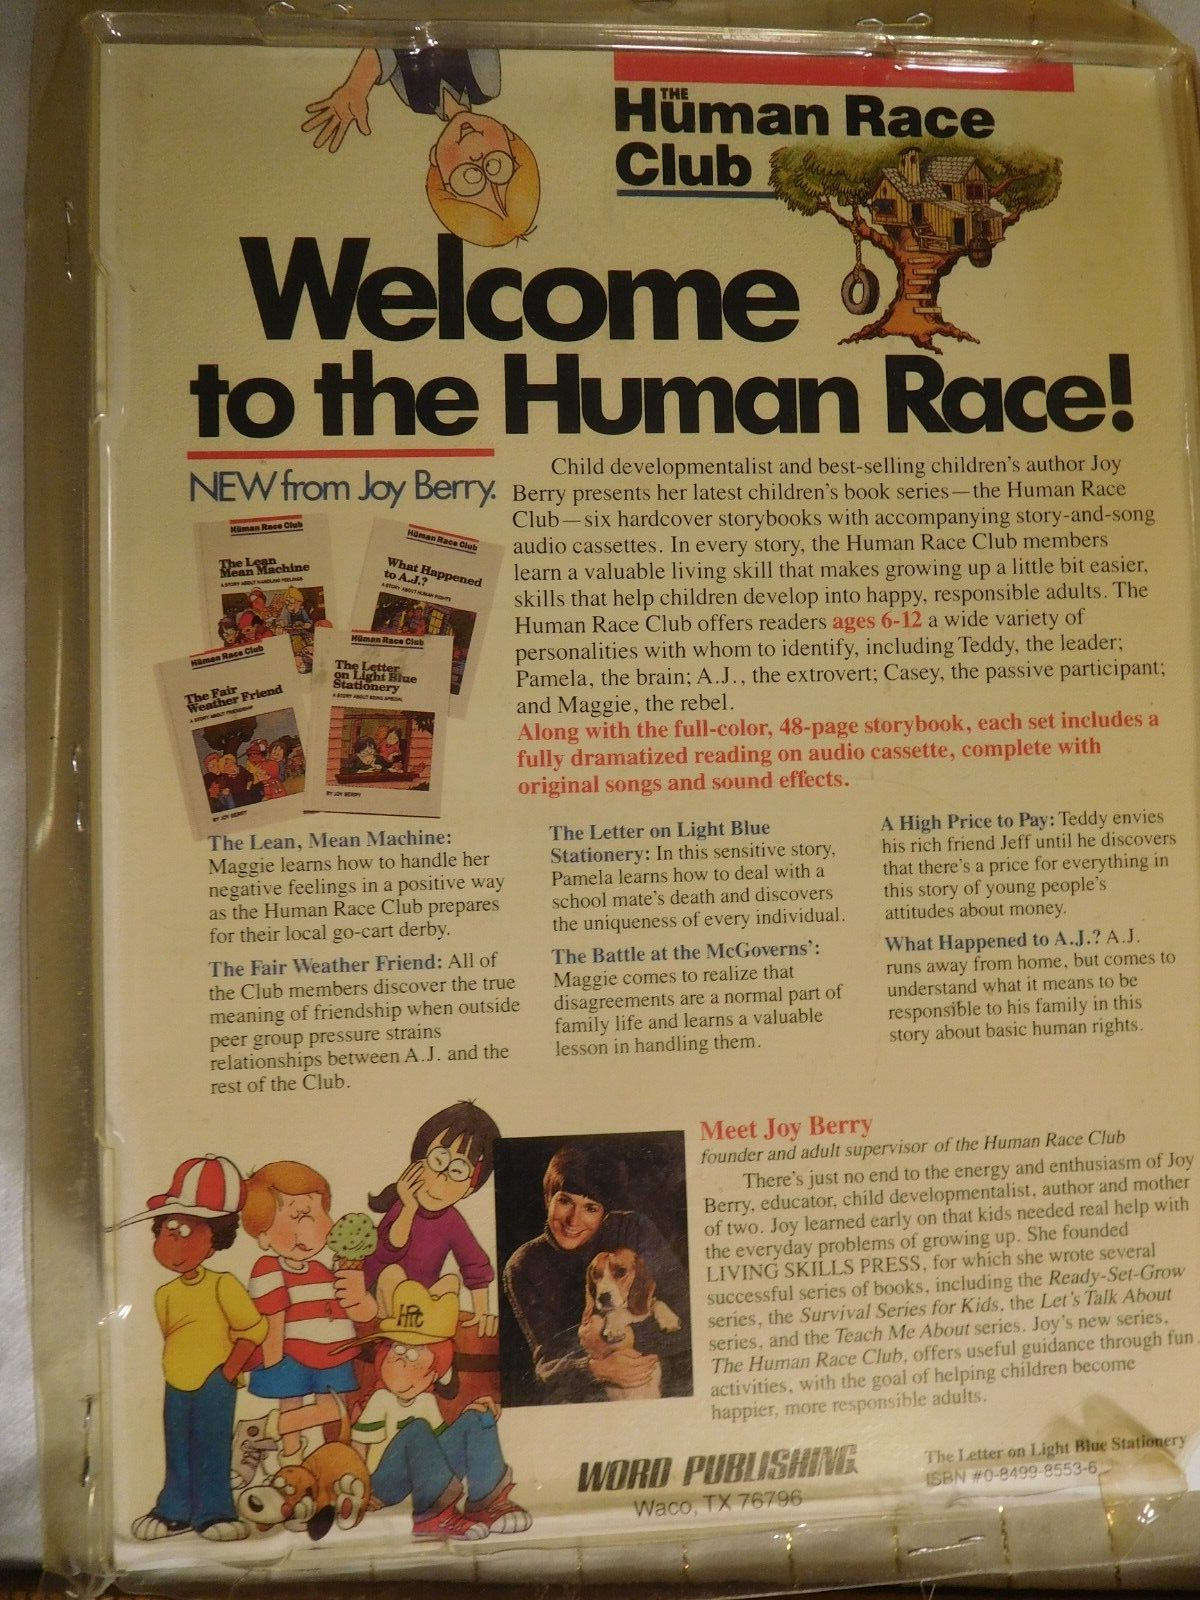 2 Vintage Human Race Club Book/Cassette ~ Letter Blue Stationary & What Hap. AJ Human Race Club - фотография #8